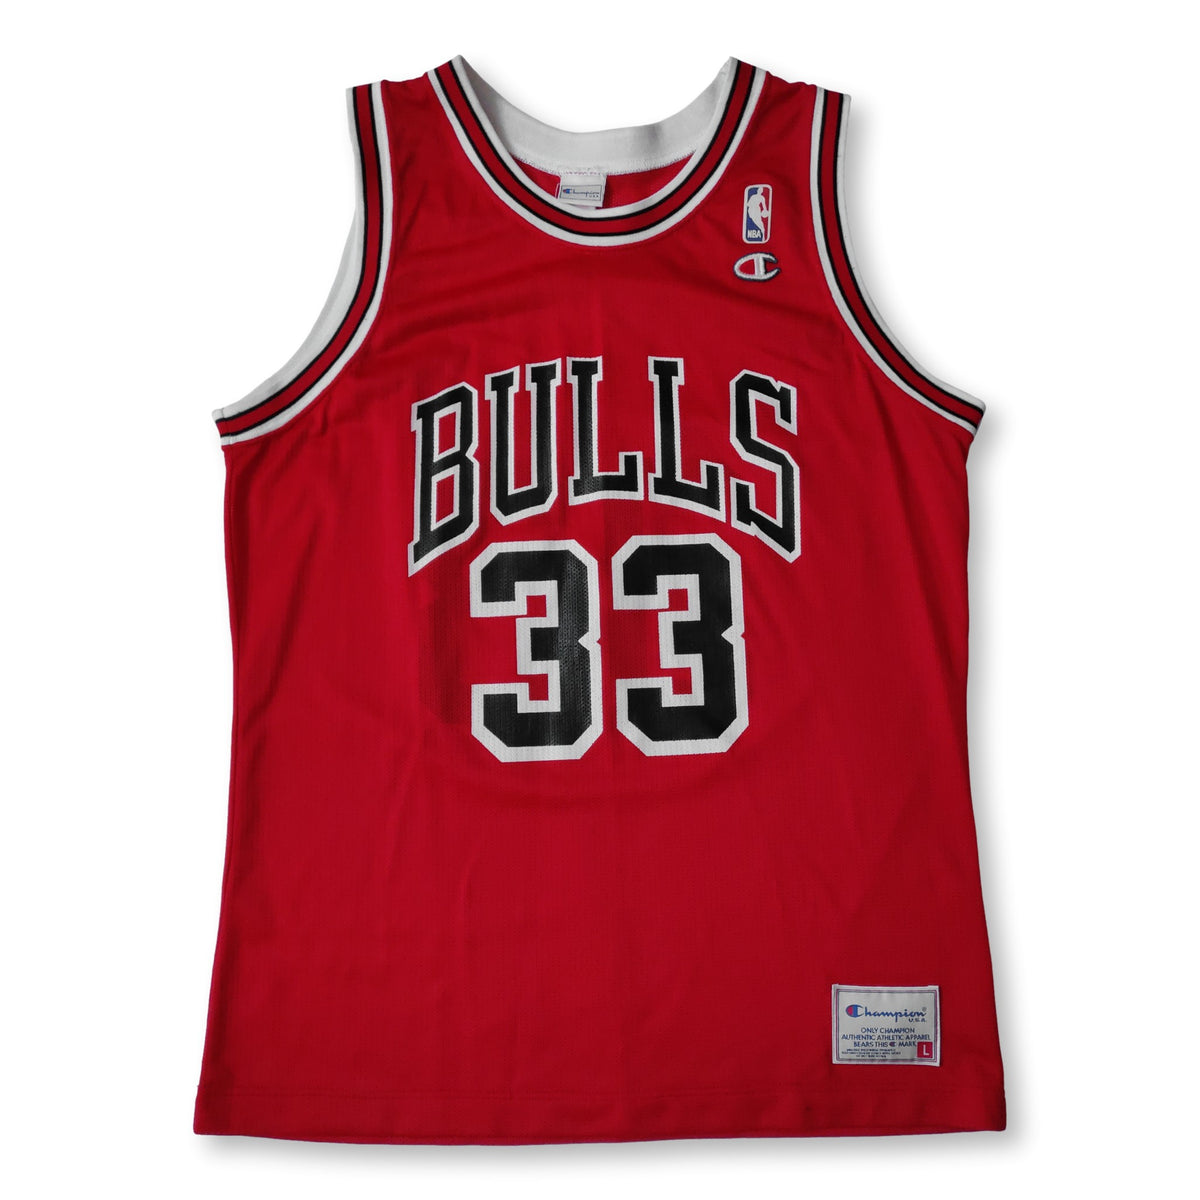 CHICAGO BULLS NBA Training Shirt Jersey Adidas Size S 